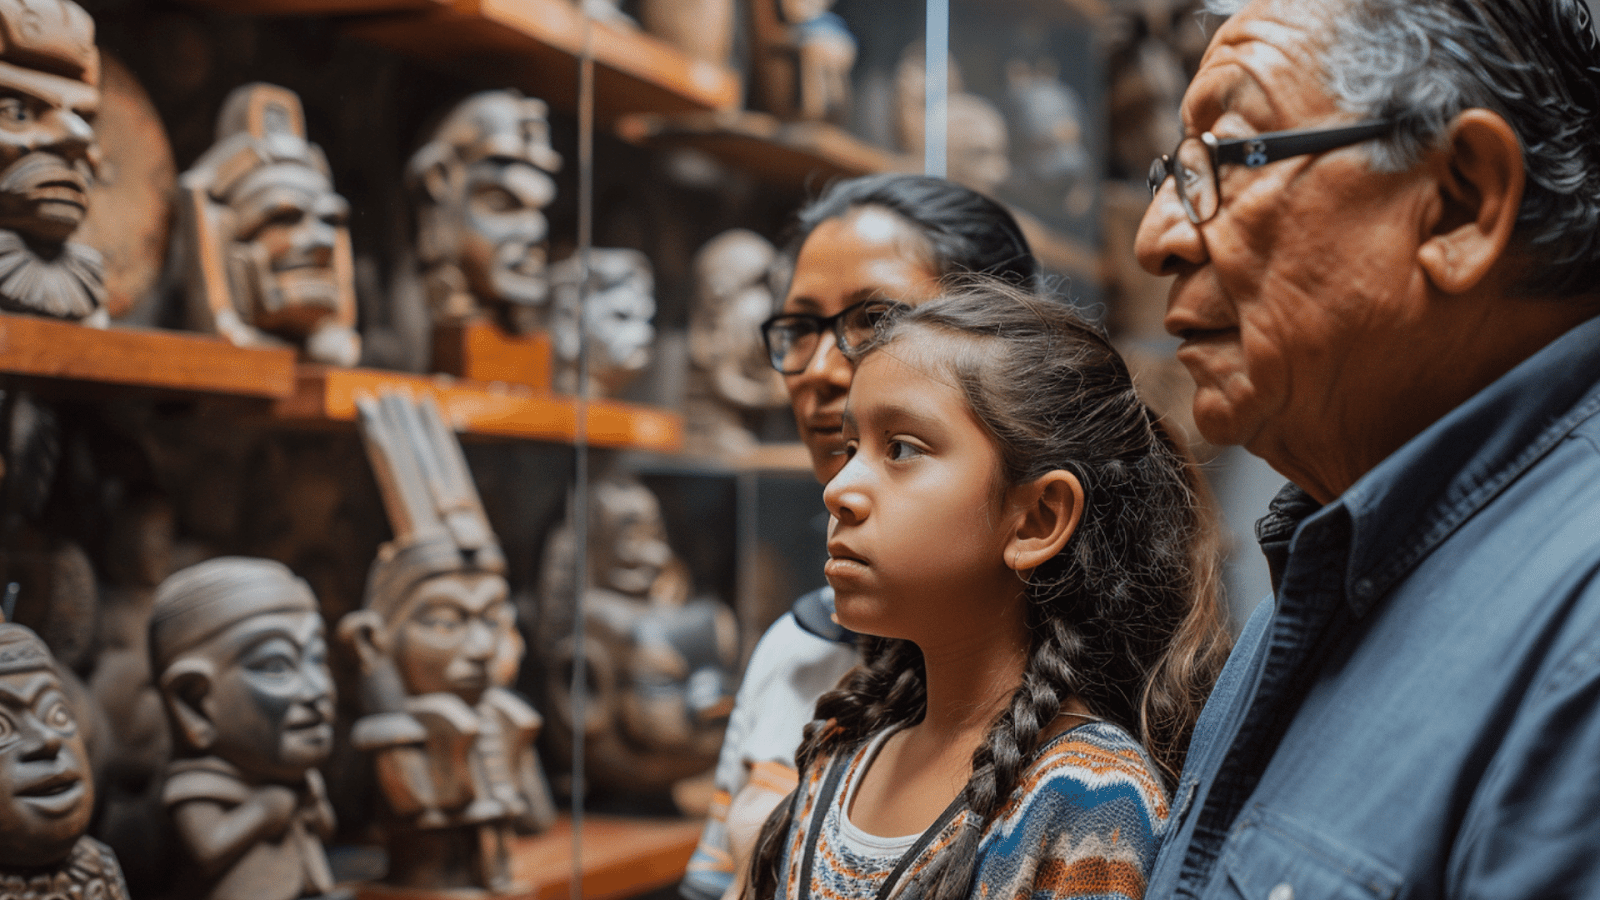 Family observing folk art at Museo de Arte Popular in Mexico City